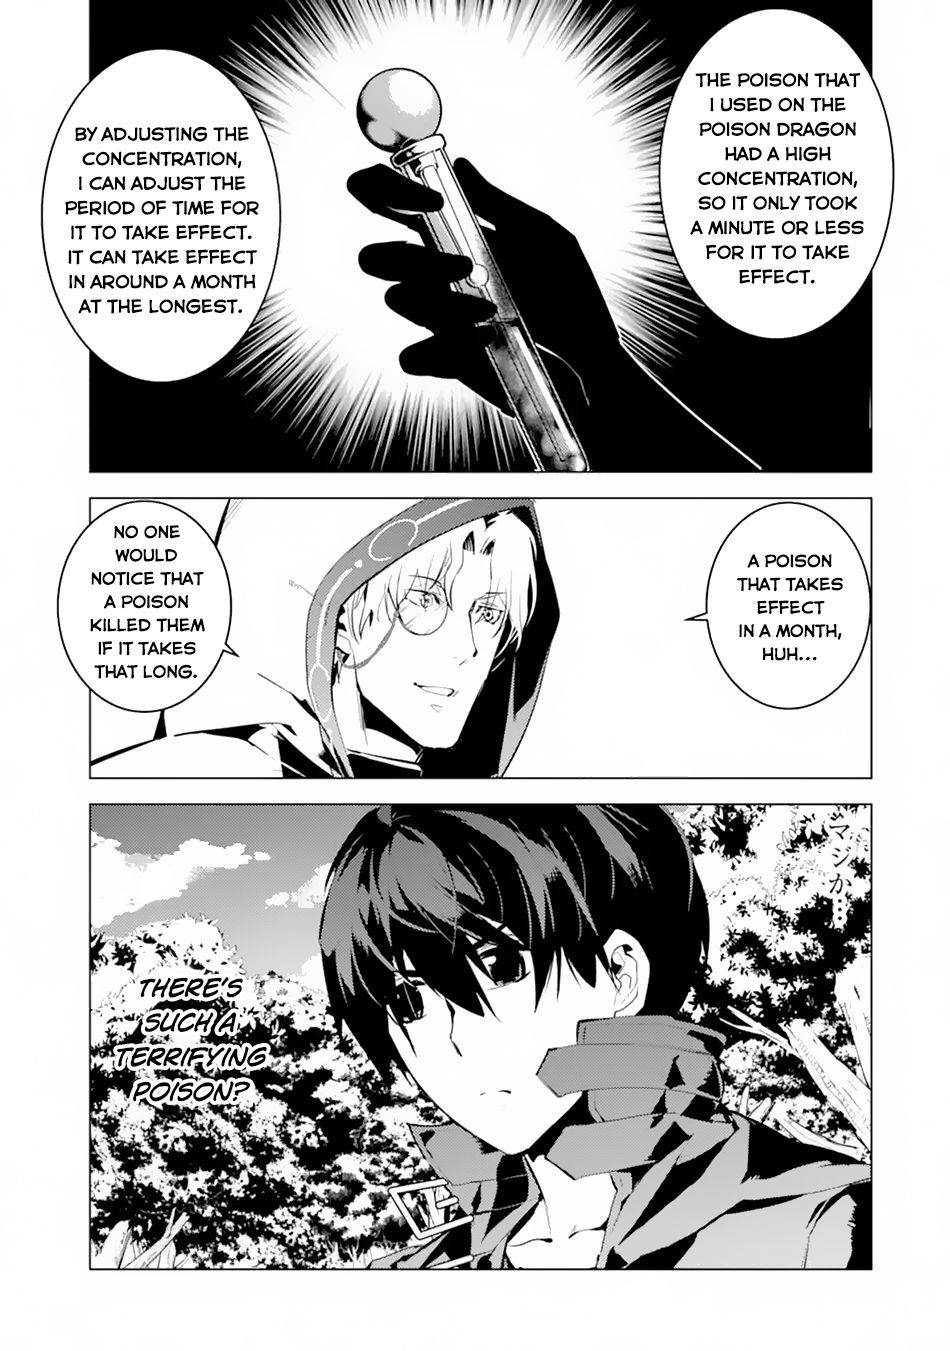 Manga Mogura RE on X: My Isekai Life: I Gained a Second Character Class &  Became the Strongest Sage in the World LN manga adaptation Vol.19 by  Shinkou Shotou, Ponjea (Friendly Land)